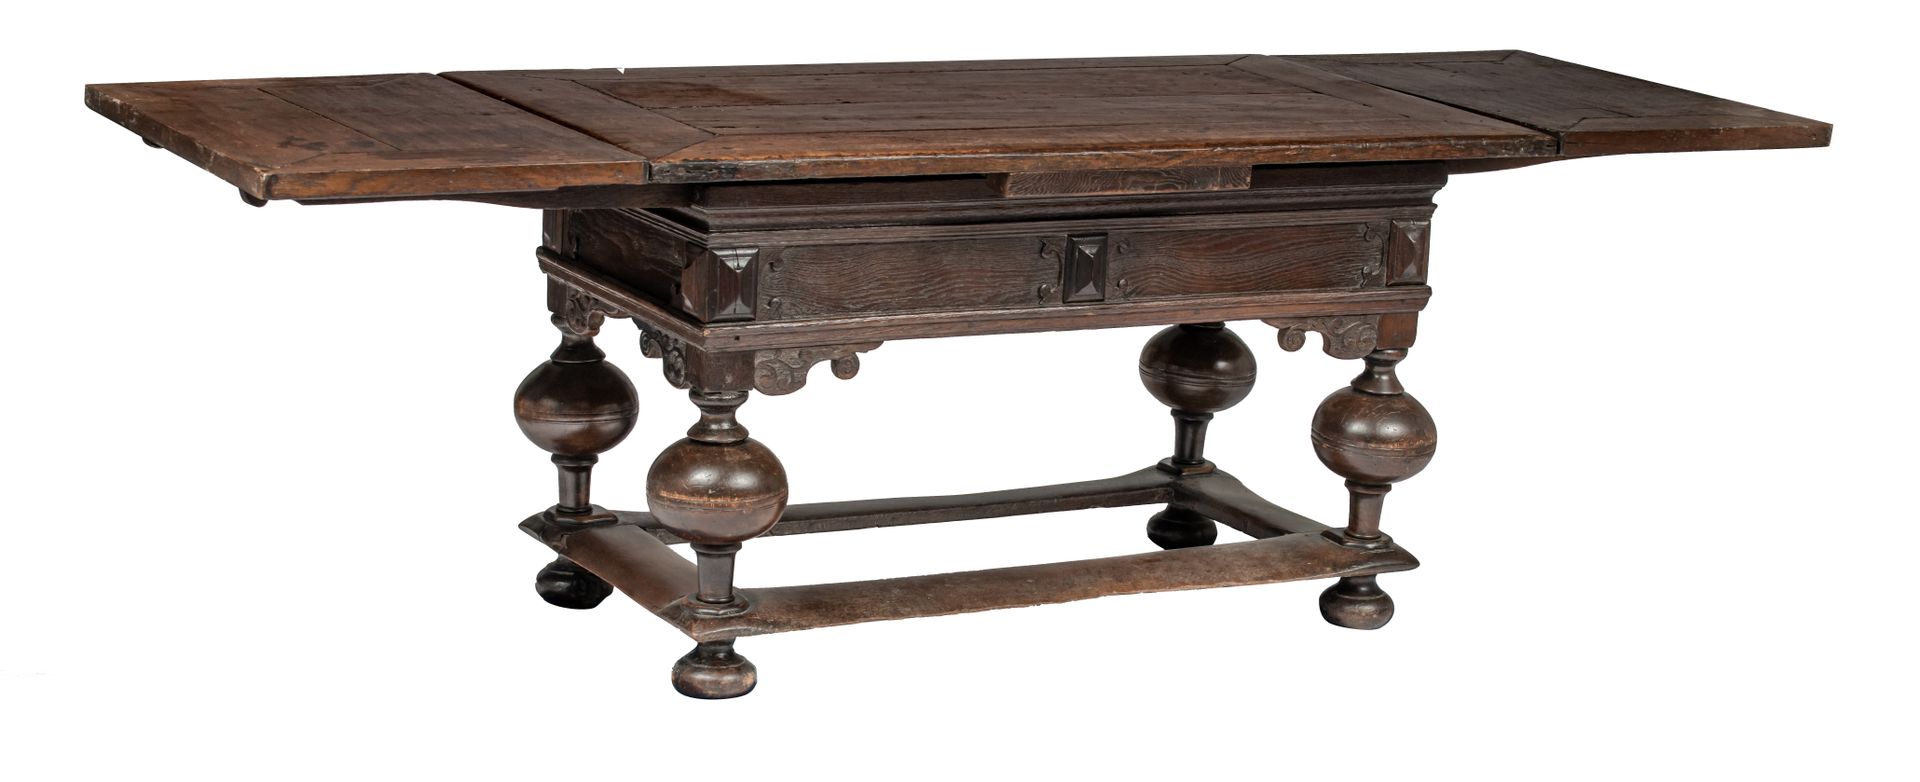 An impressive Flemish or Dutch oak table, early 17thC, H 80 - W 146 - 252 - D 85&hellip;